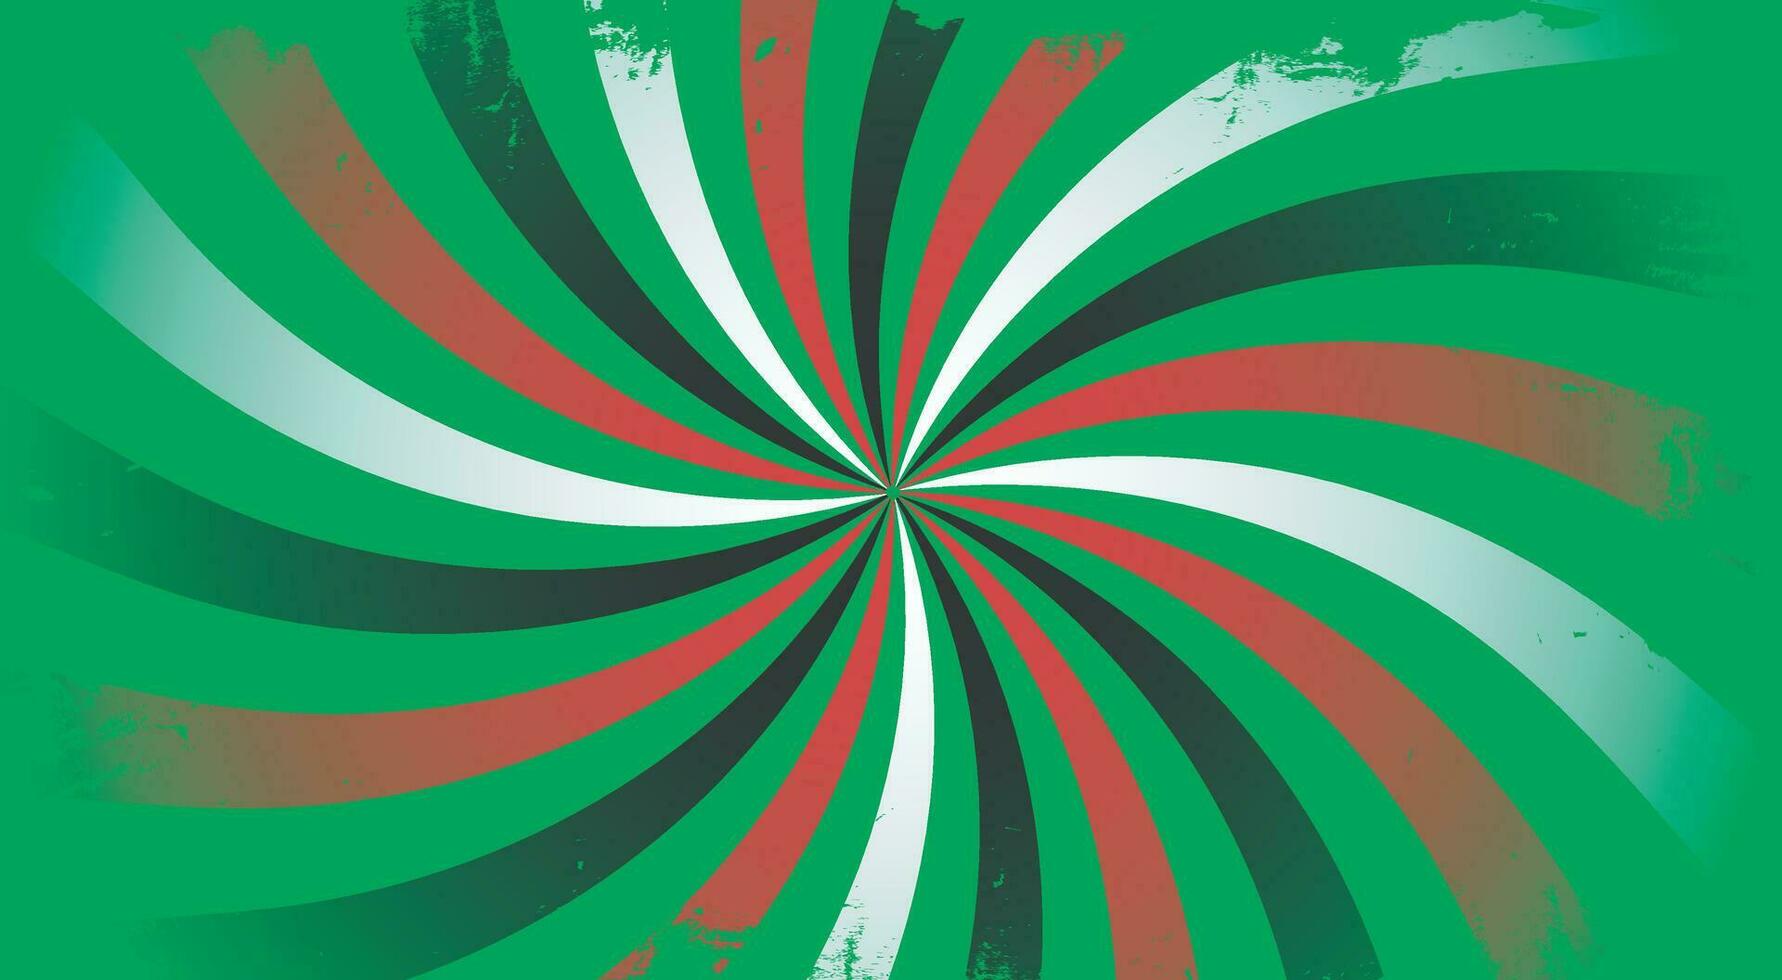 Palestine flag vintage style background with a grunge starburst effect vector